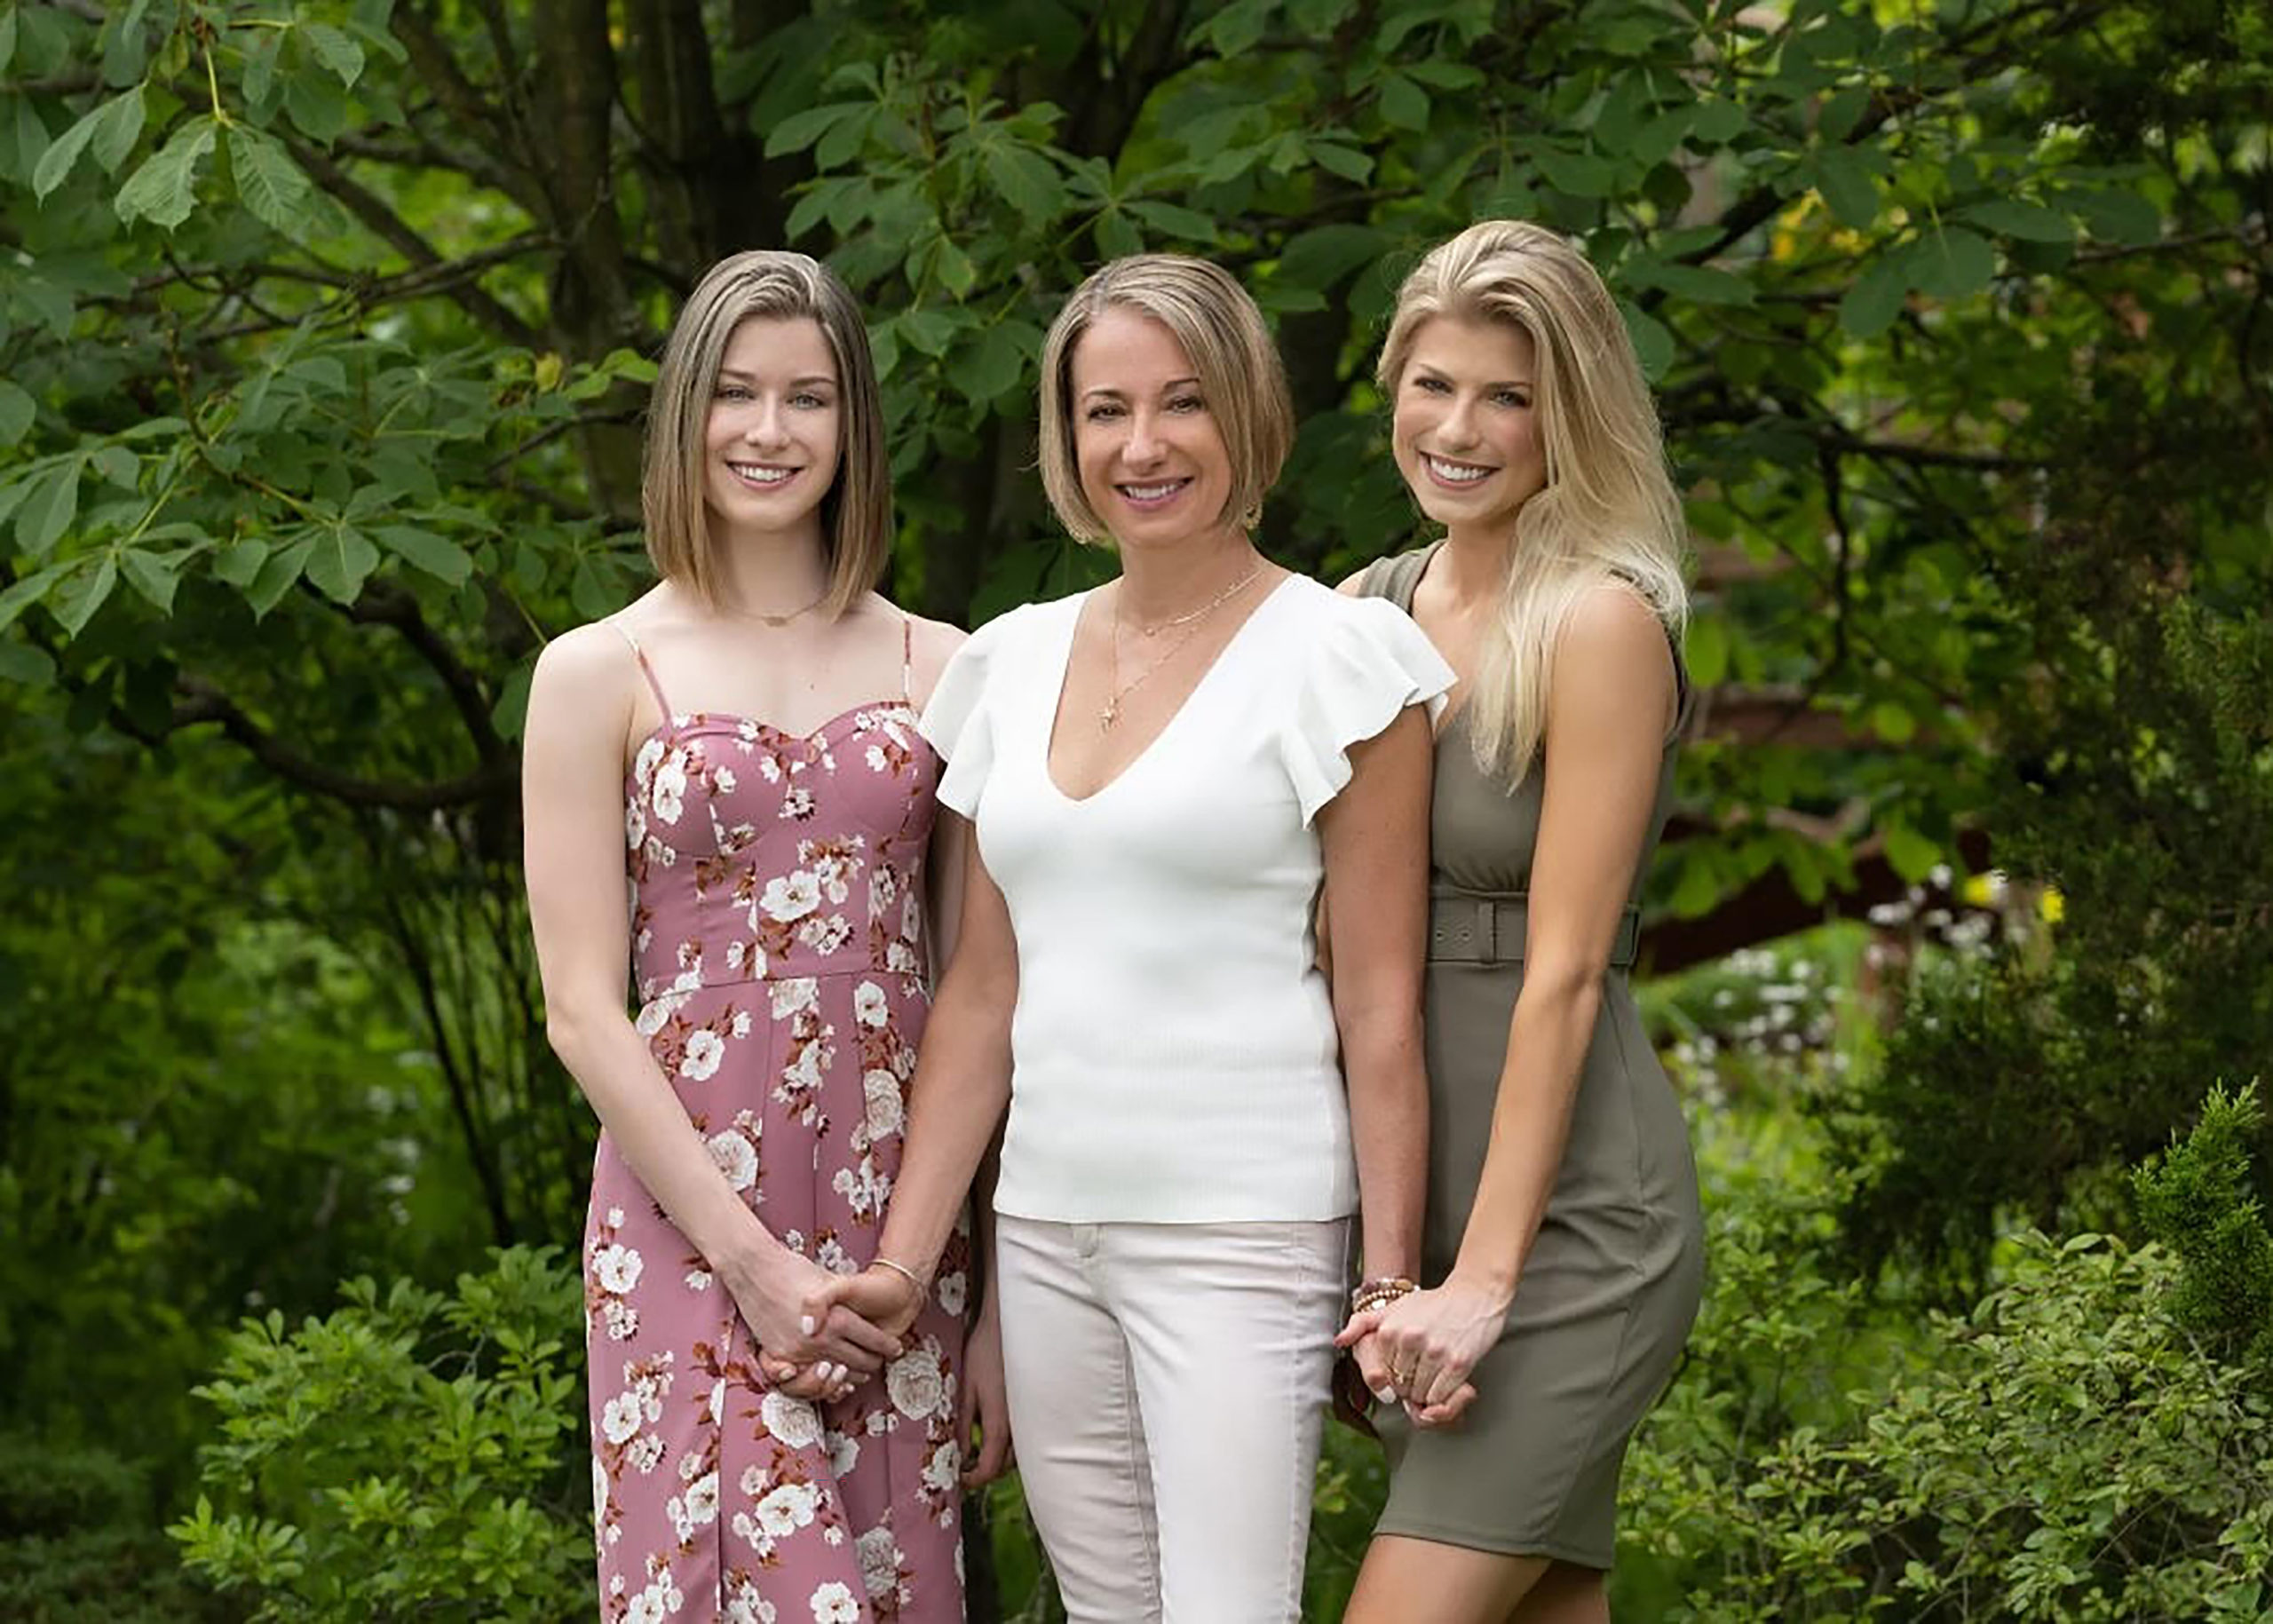 Three women against a grassy backdrop